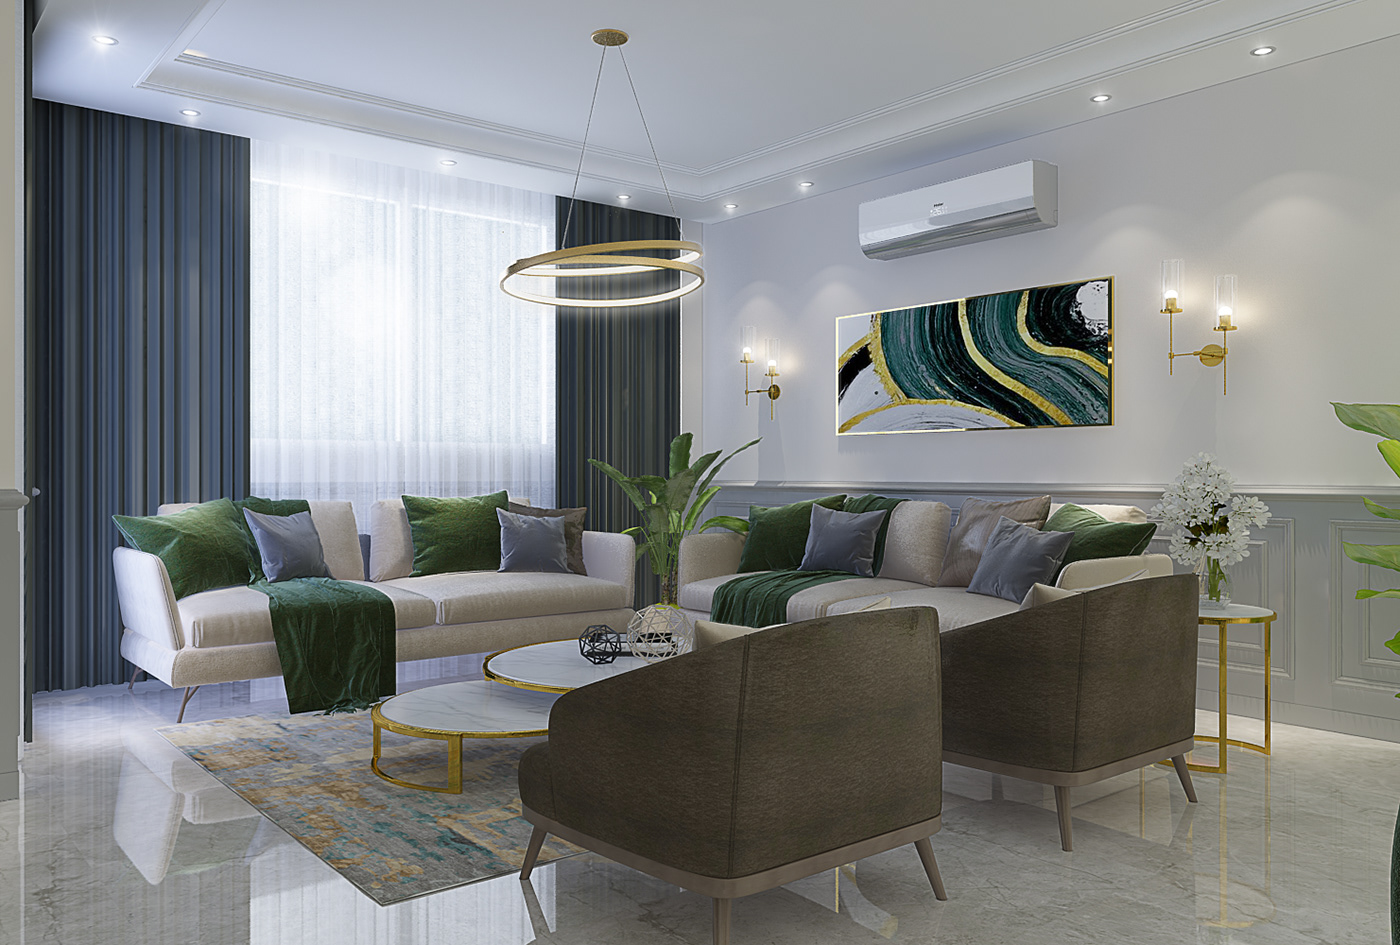 3D 3ds max architecture indoor interior design  modern Render visualization vray